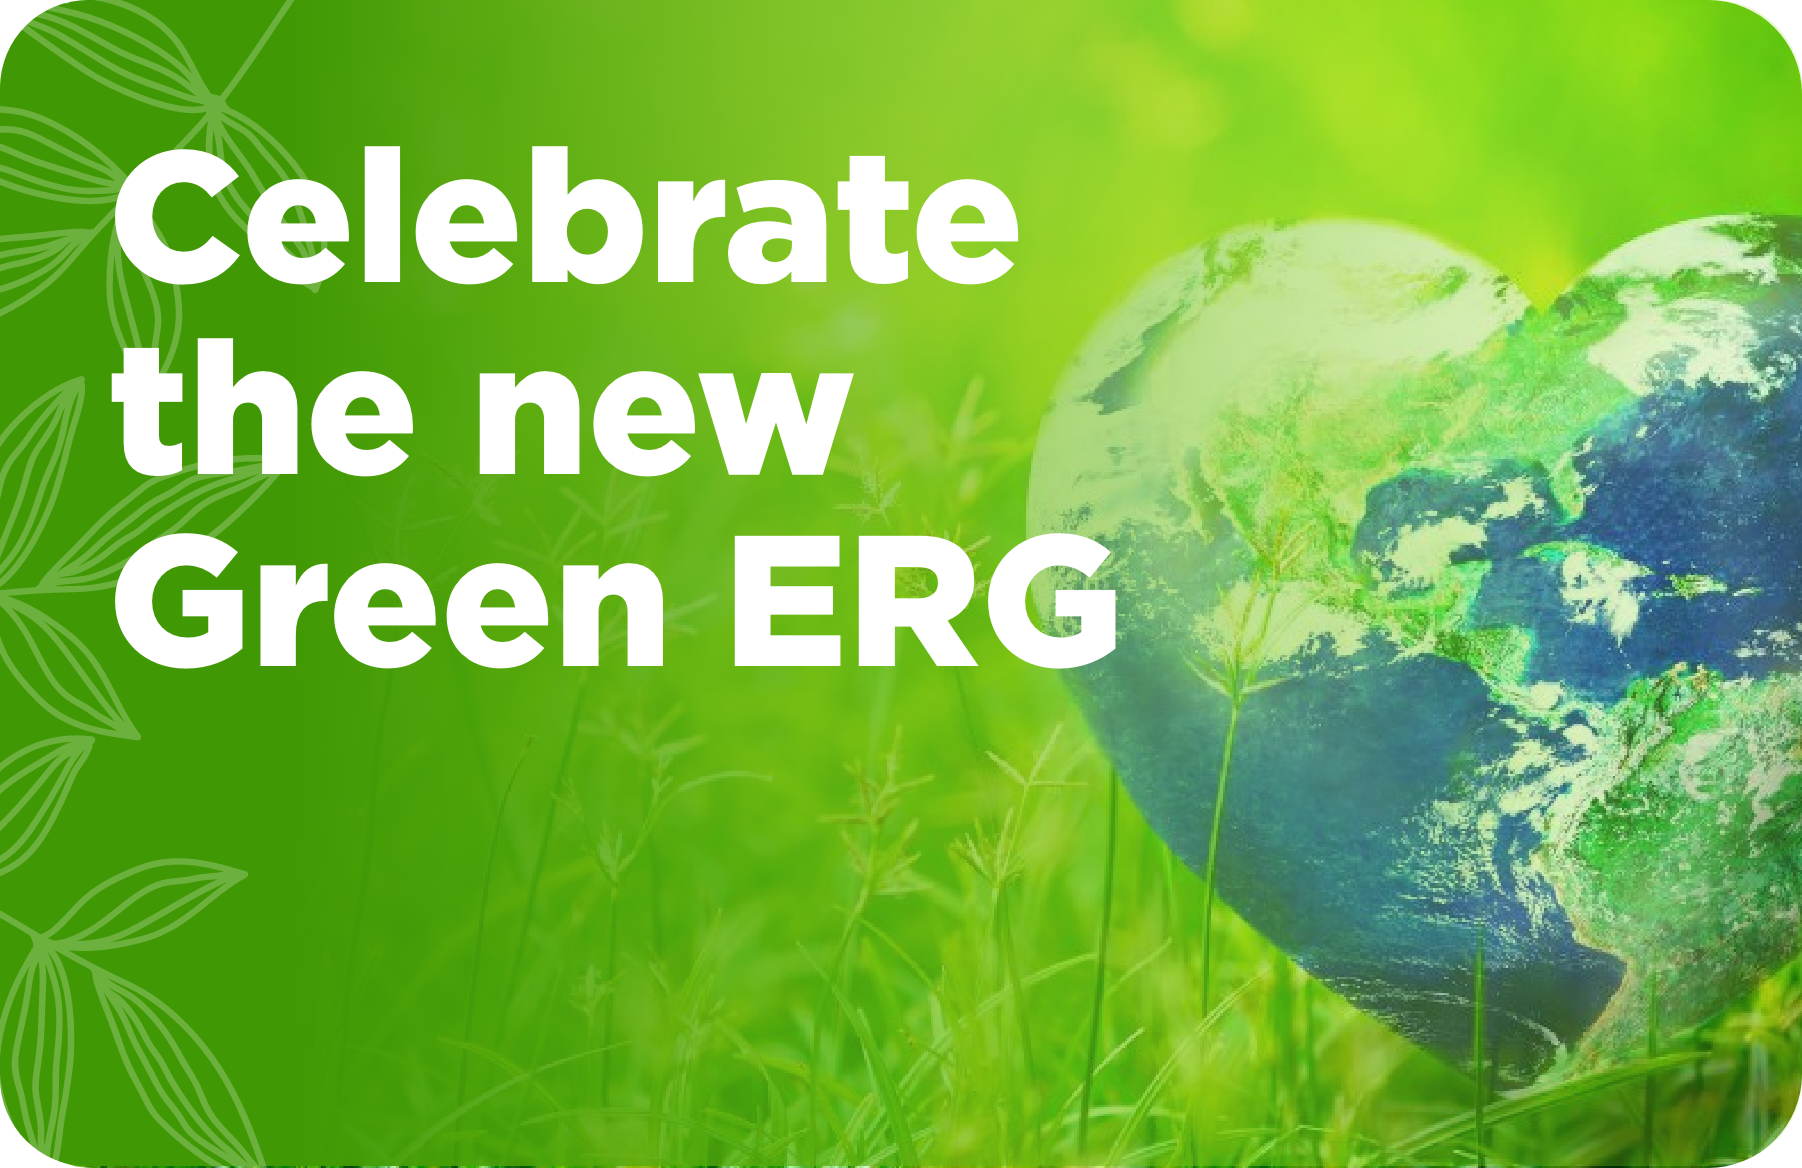 Celebrate the new Green ERG